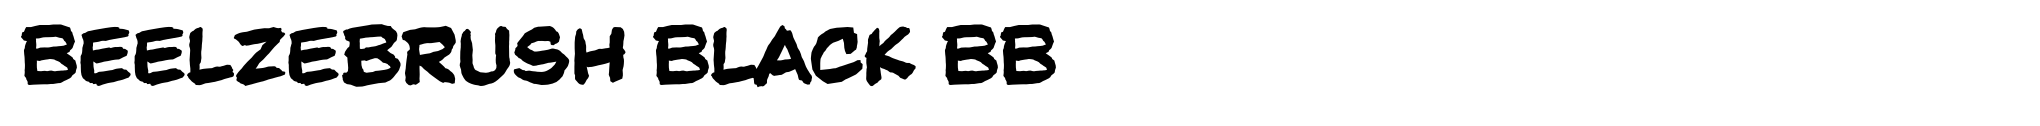 Beelzebrush Black BB image